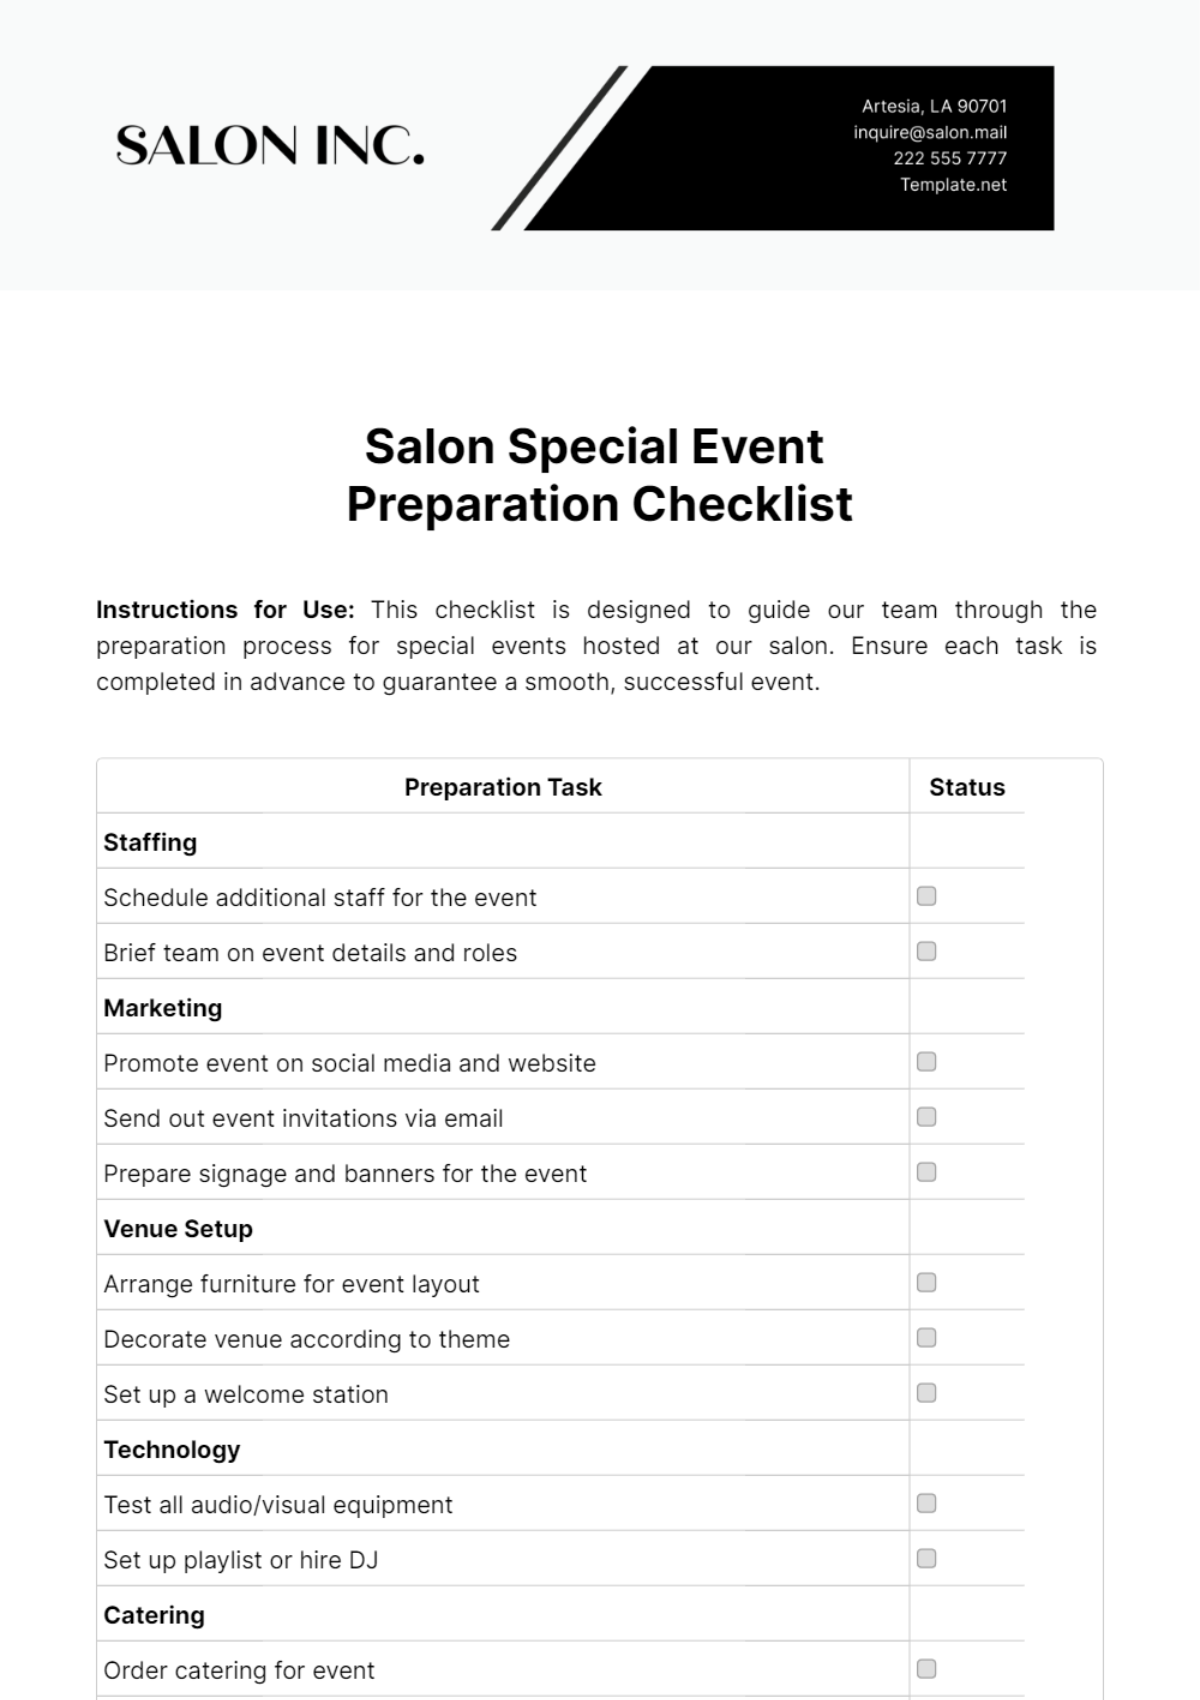 Free Salon Special Event Preparation Checklist Template